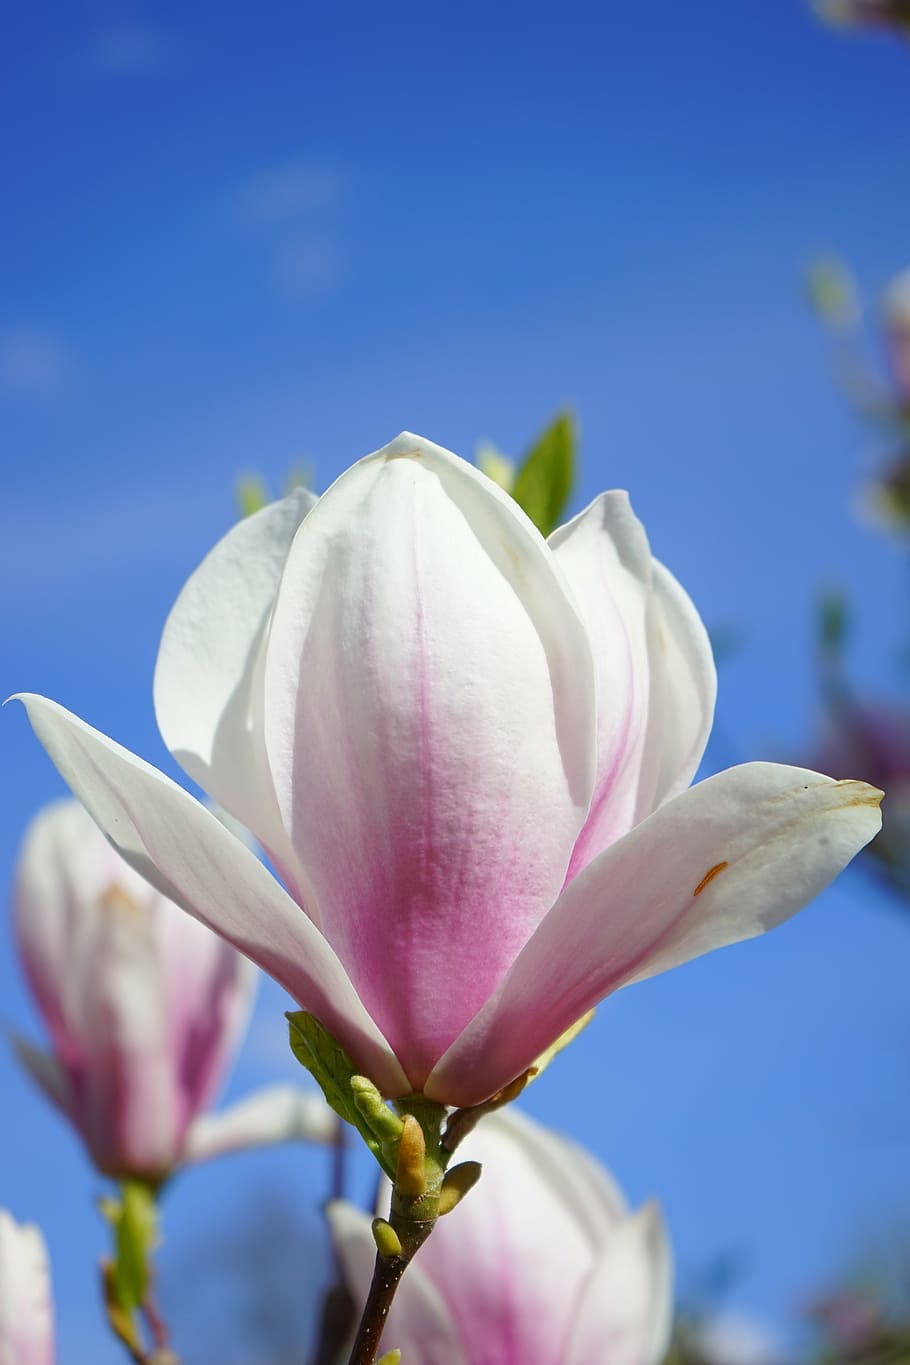 white, pink, petaled flower, bloom close-up photo, magnolia, magnolia blossom, flowers, blütenmeer, ornamental plant, magnoliengewaechs